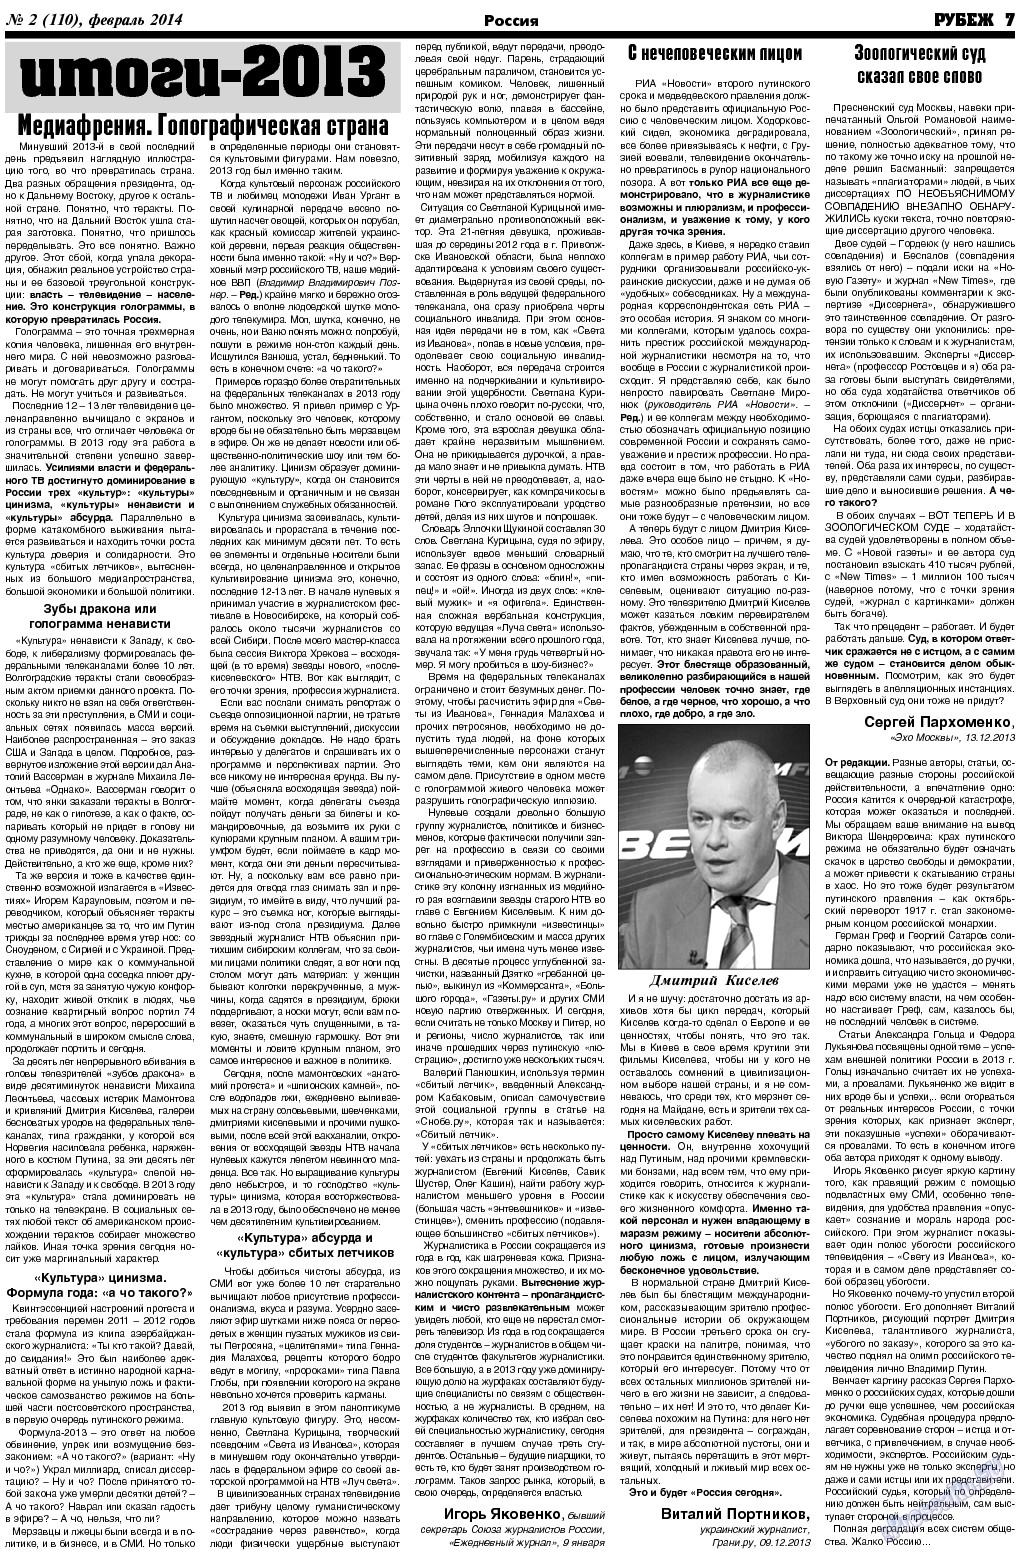 Рубеж, газета. 2014 №2 стр.7